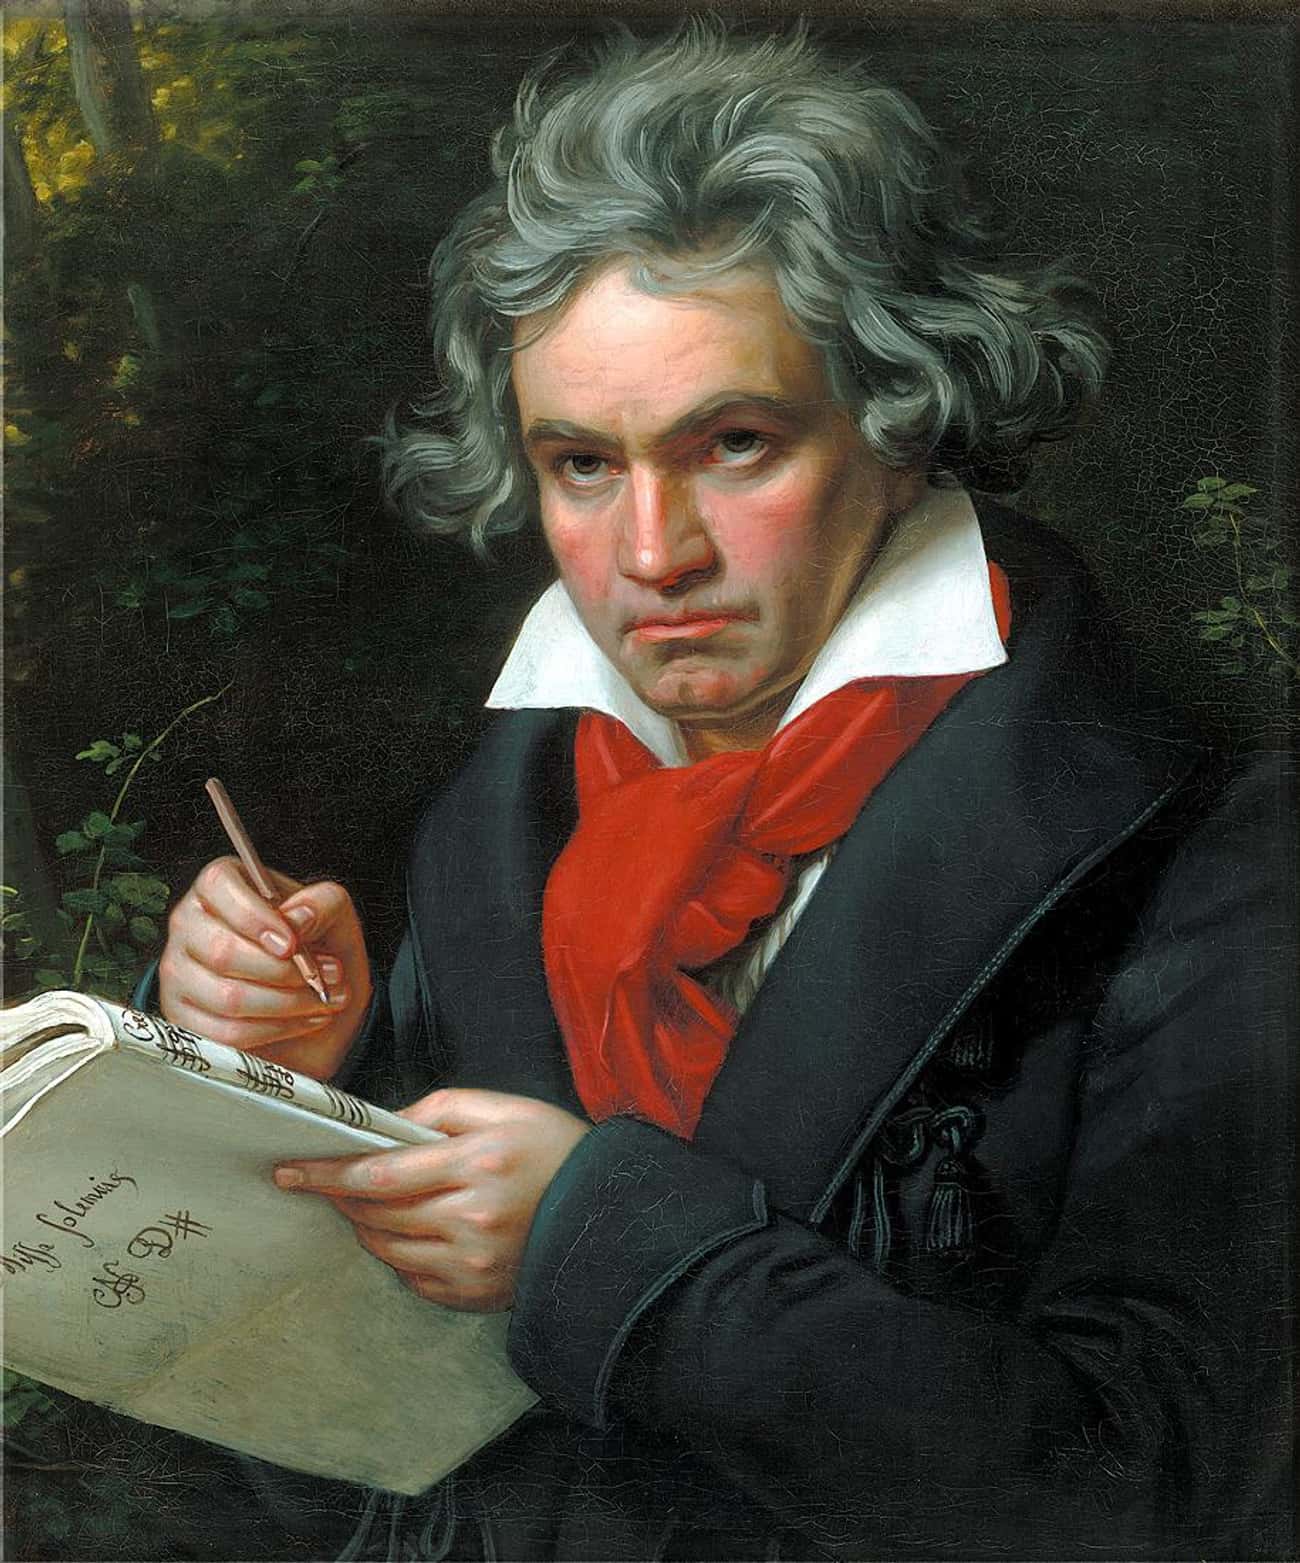 Portrait of Ludwig van Beethoven Composing Missa Solemnis